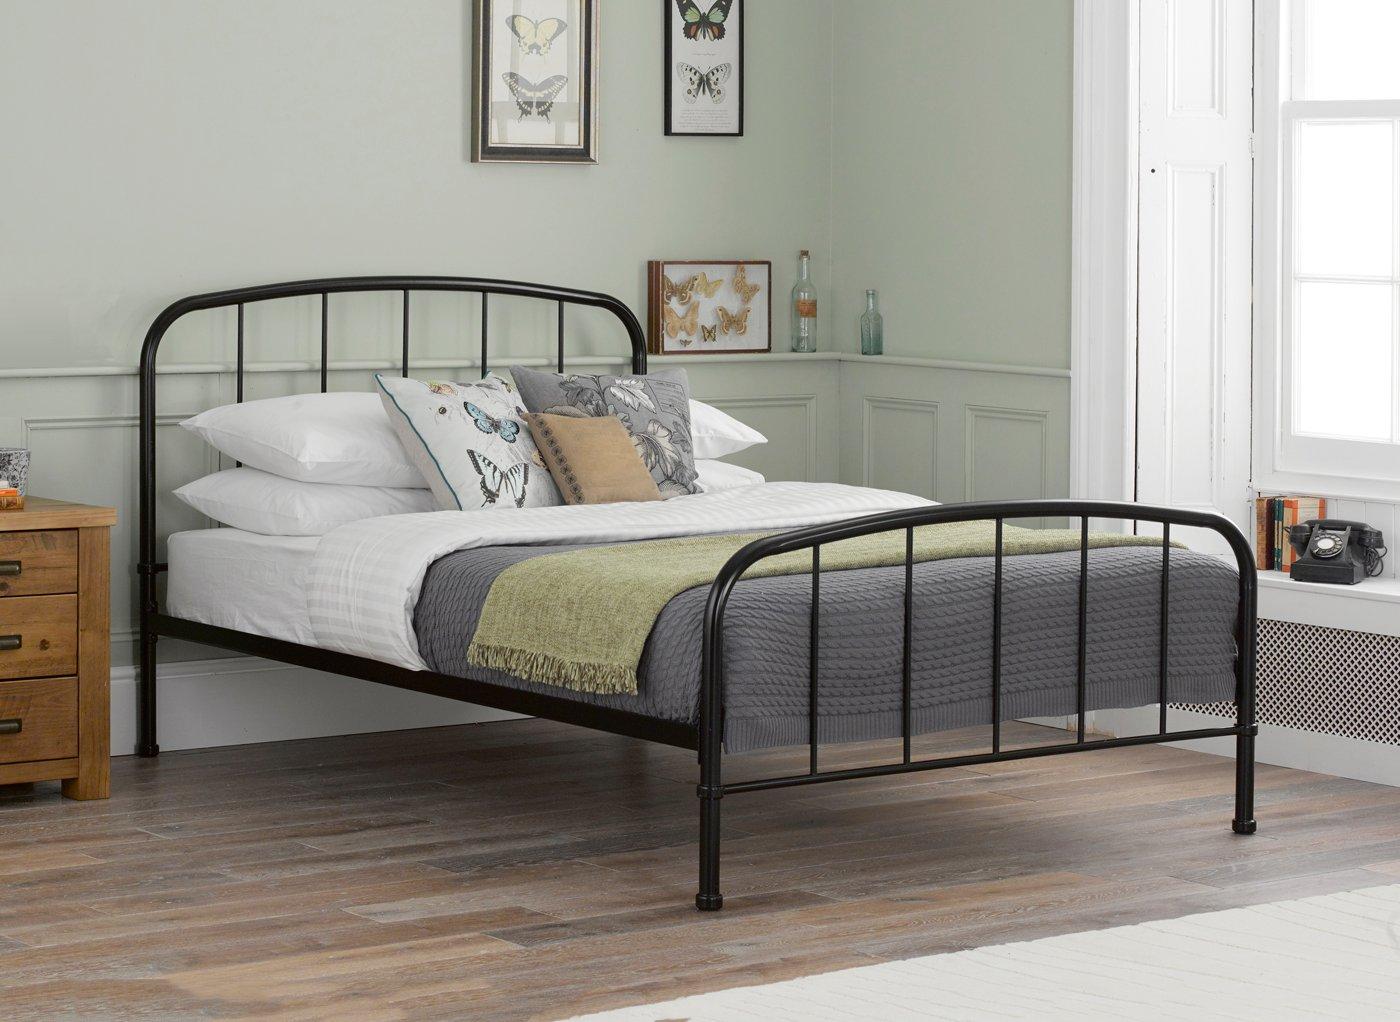 Single//Double Bed Frame Black Metal Size 3ft,4ft6 Bedframe Guest Sturdy Bedstead